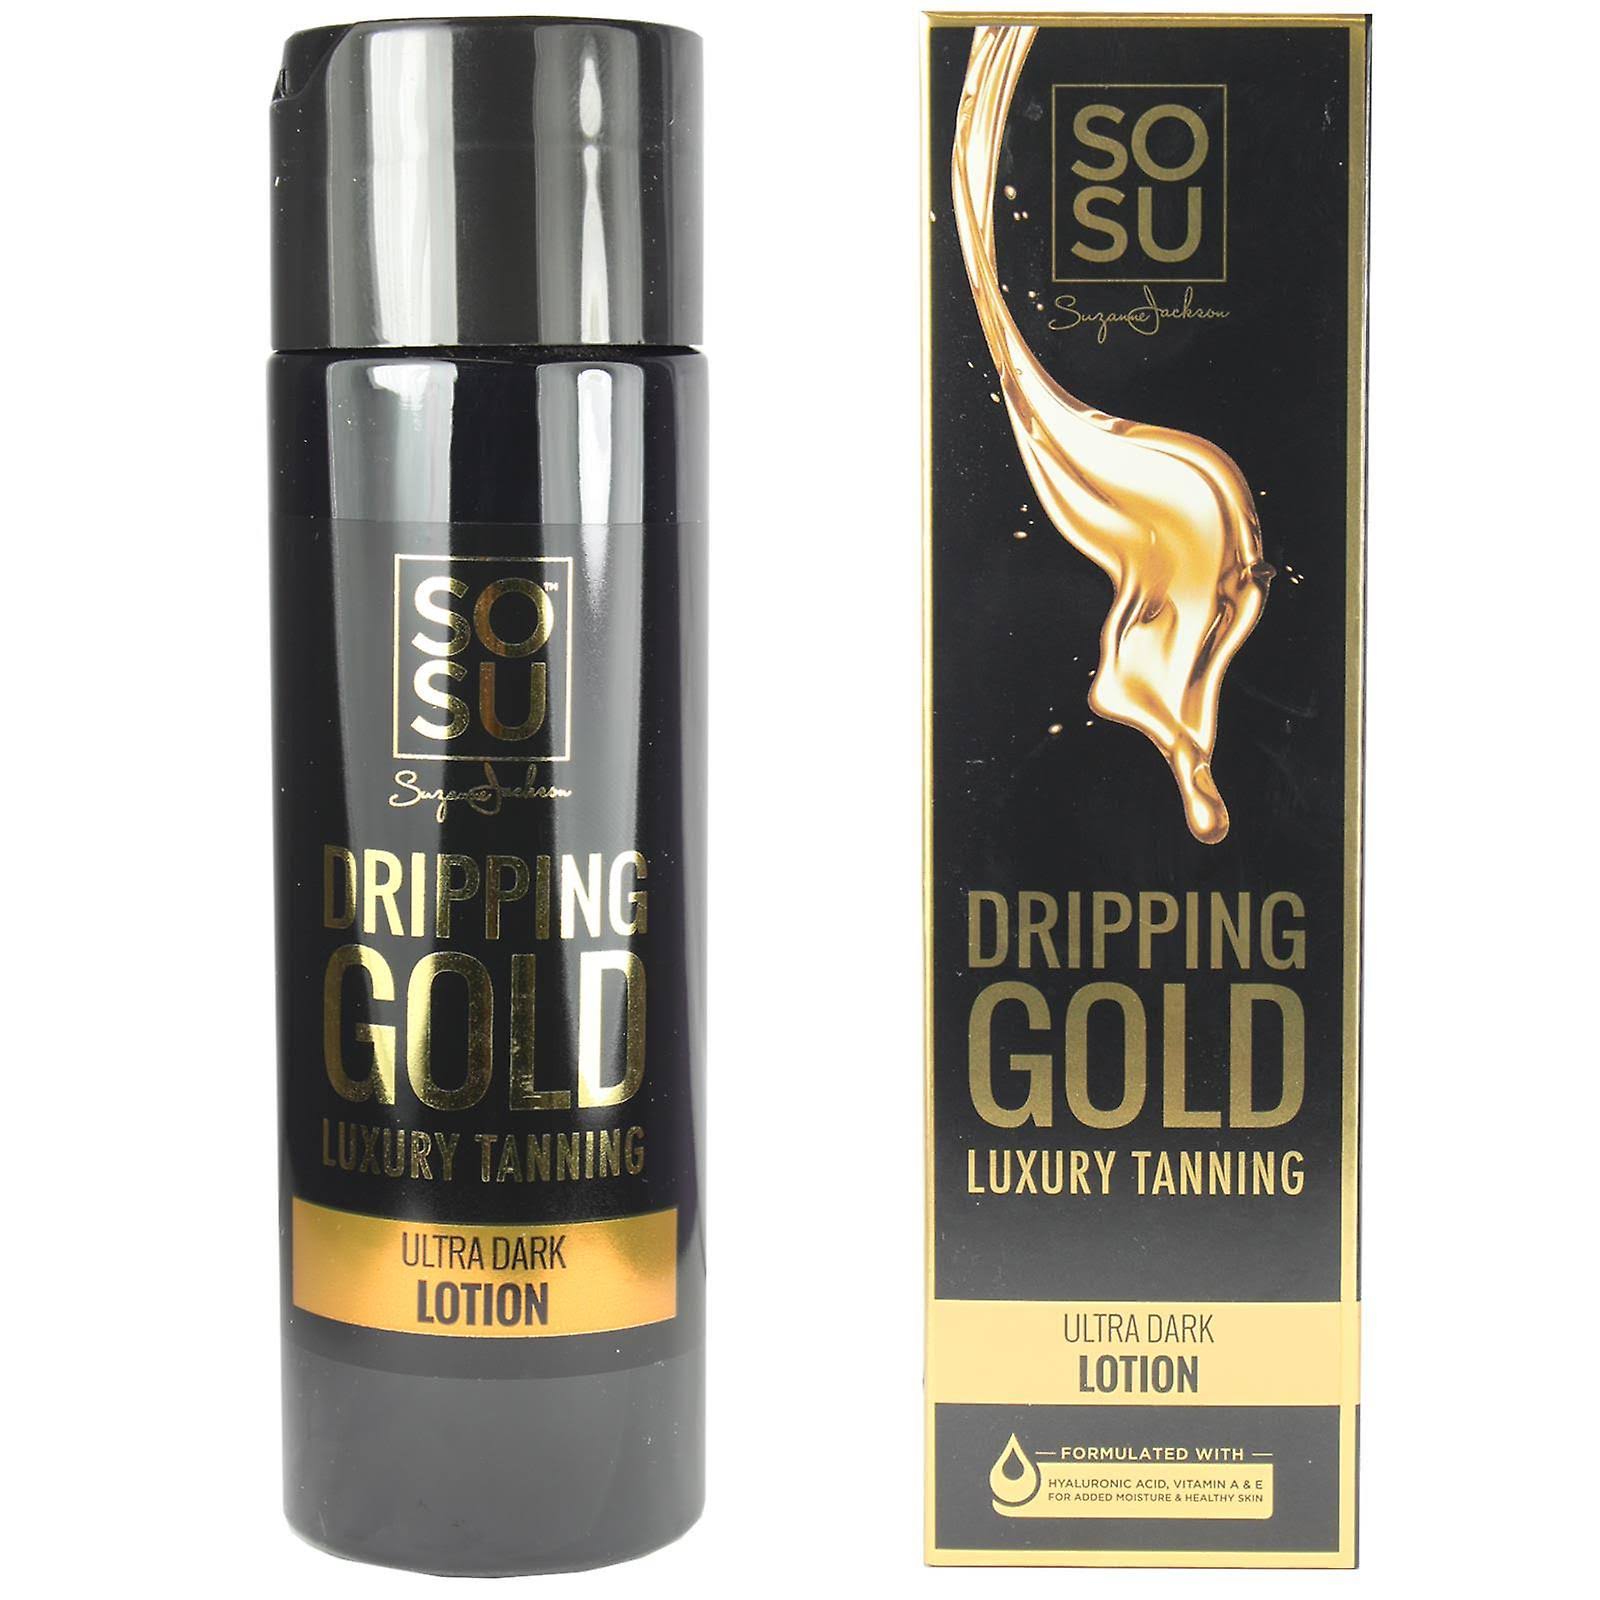 SOSUbySJ Dripping Gold Luxury Tanning Lotion Ultra Dark